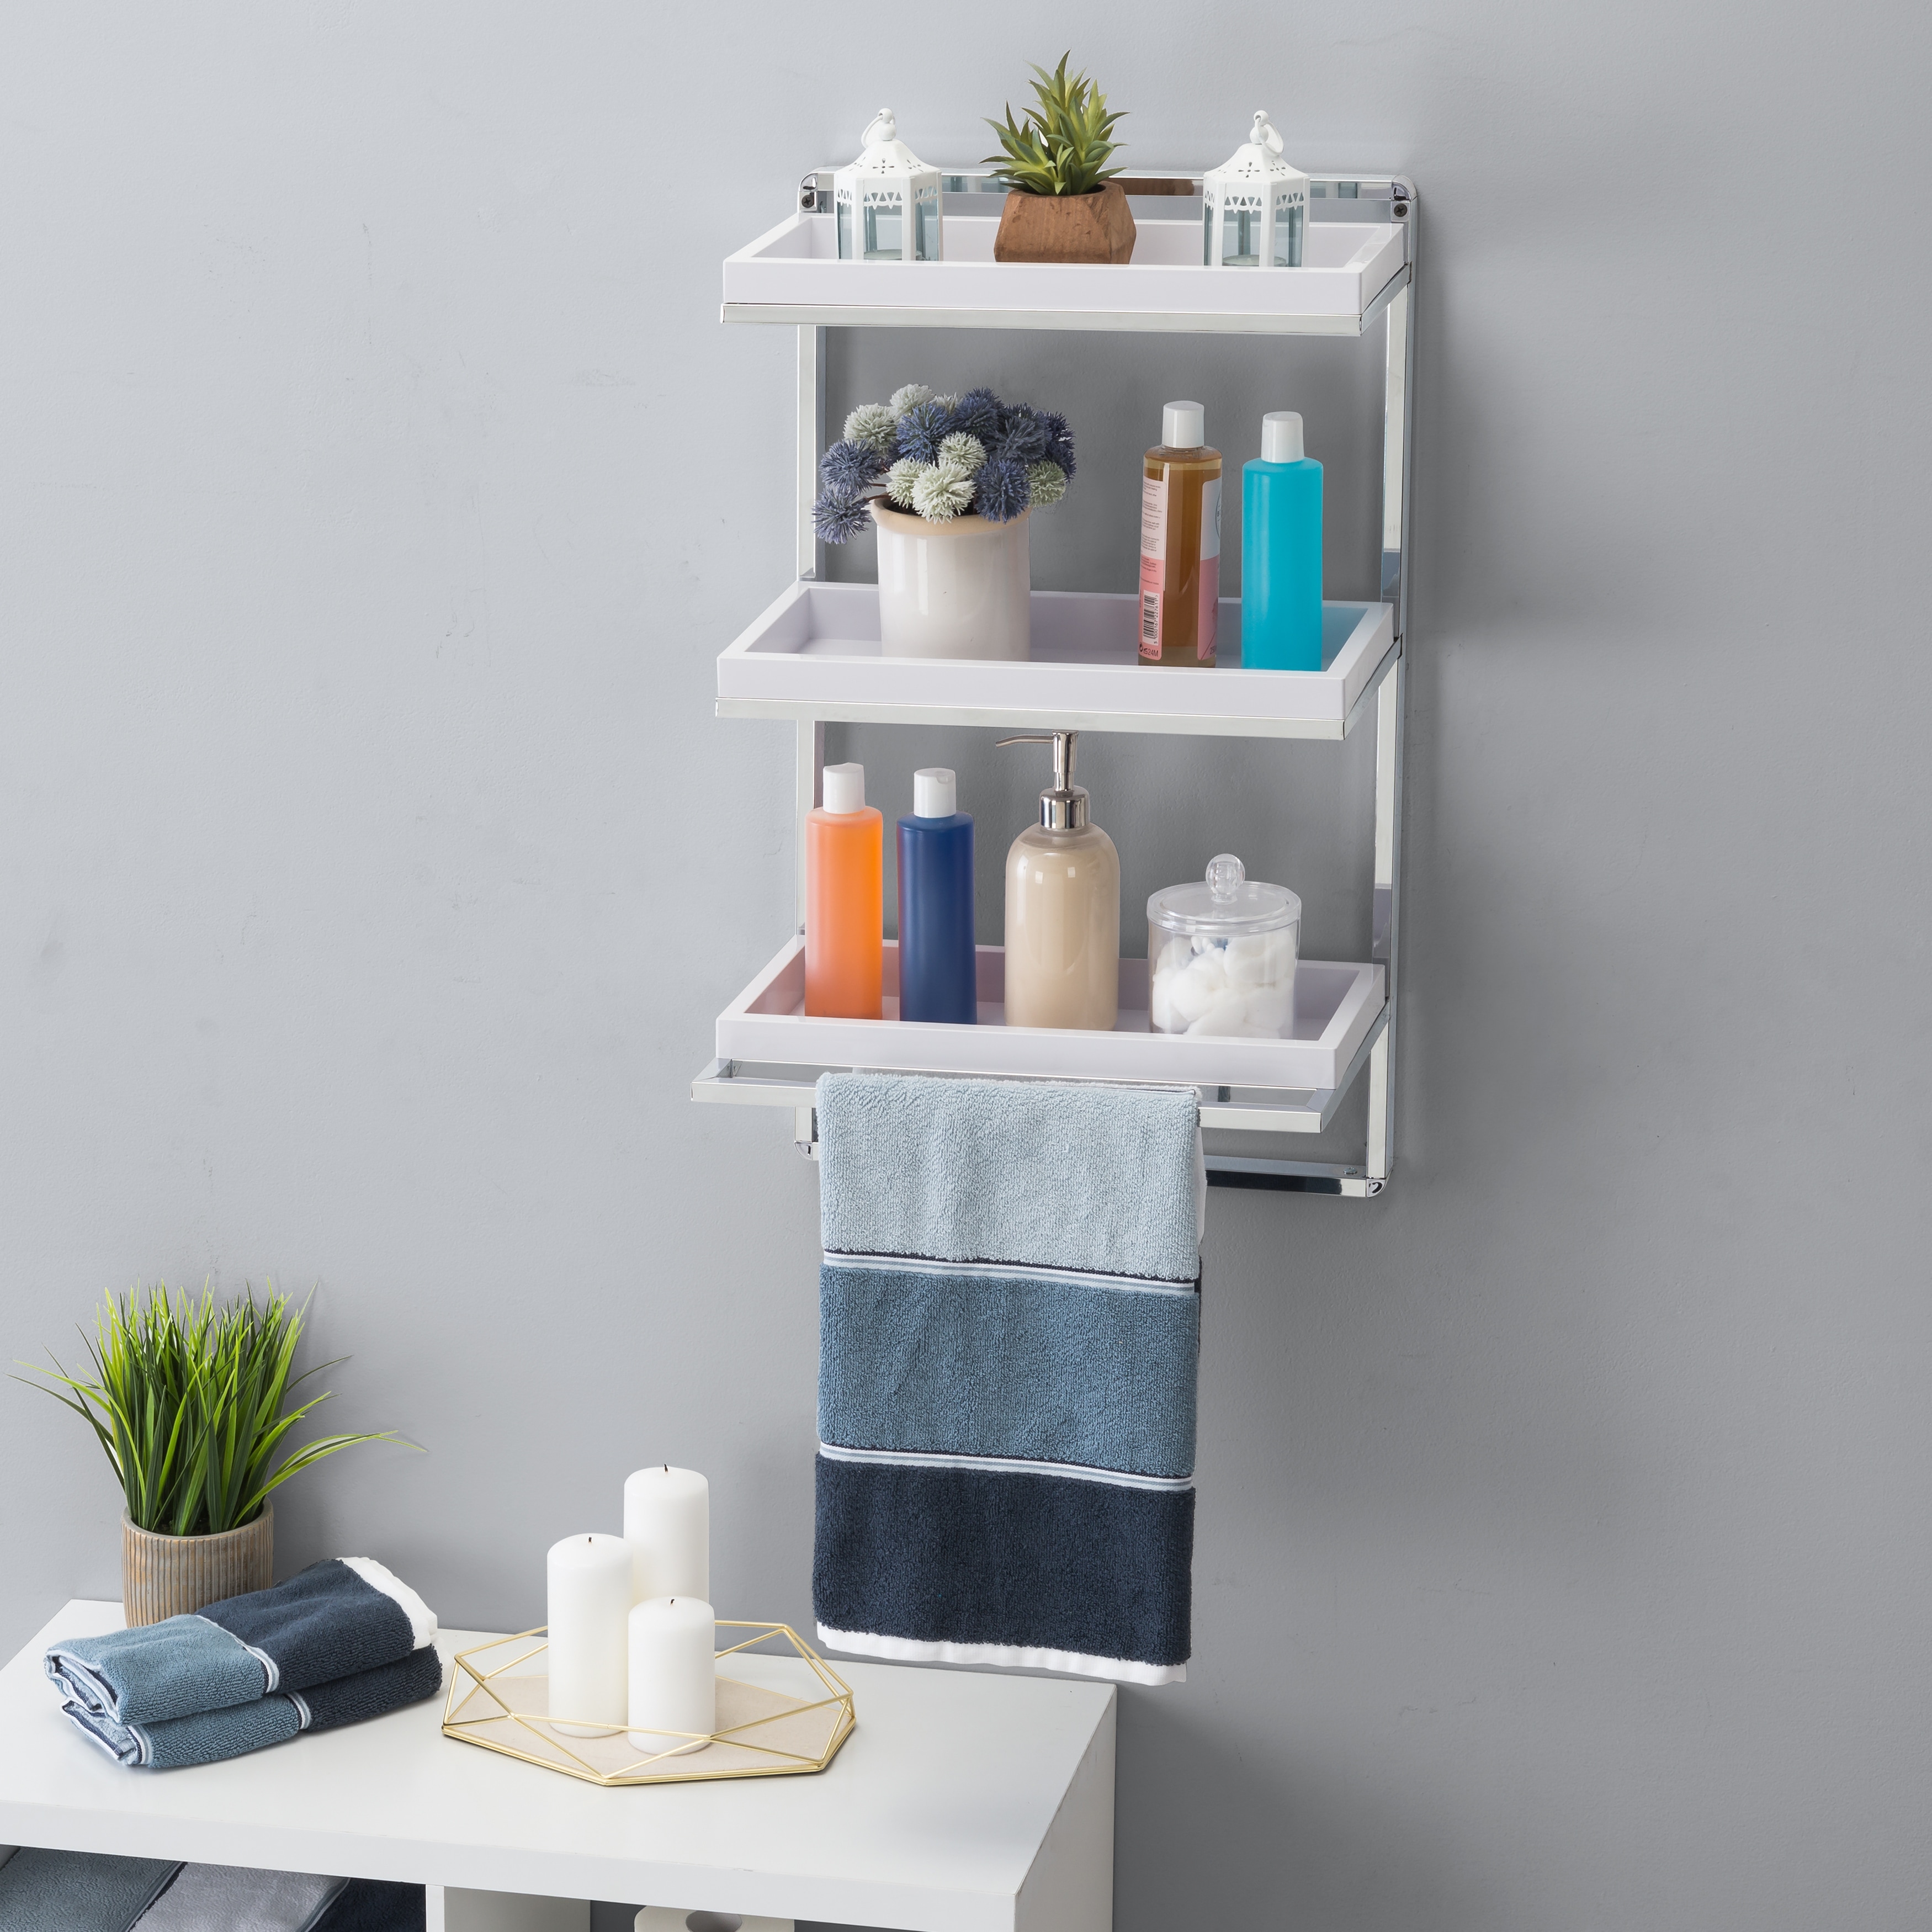 Utex 3 Tier Bathroom Shelf Wall Mounted with Towel Hooks, Bathroom Organizer